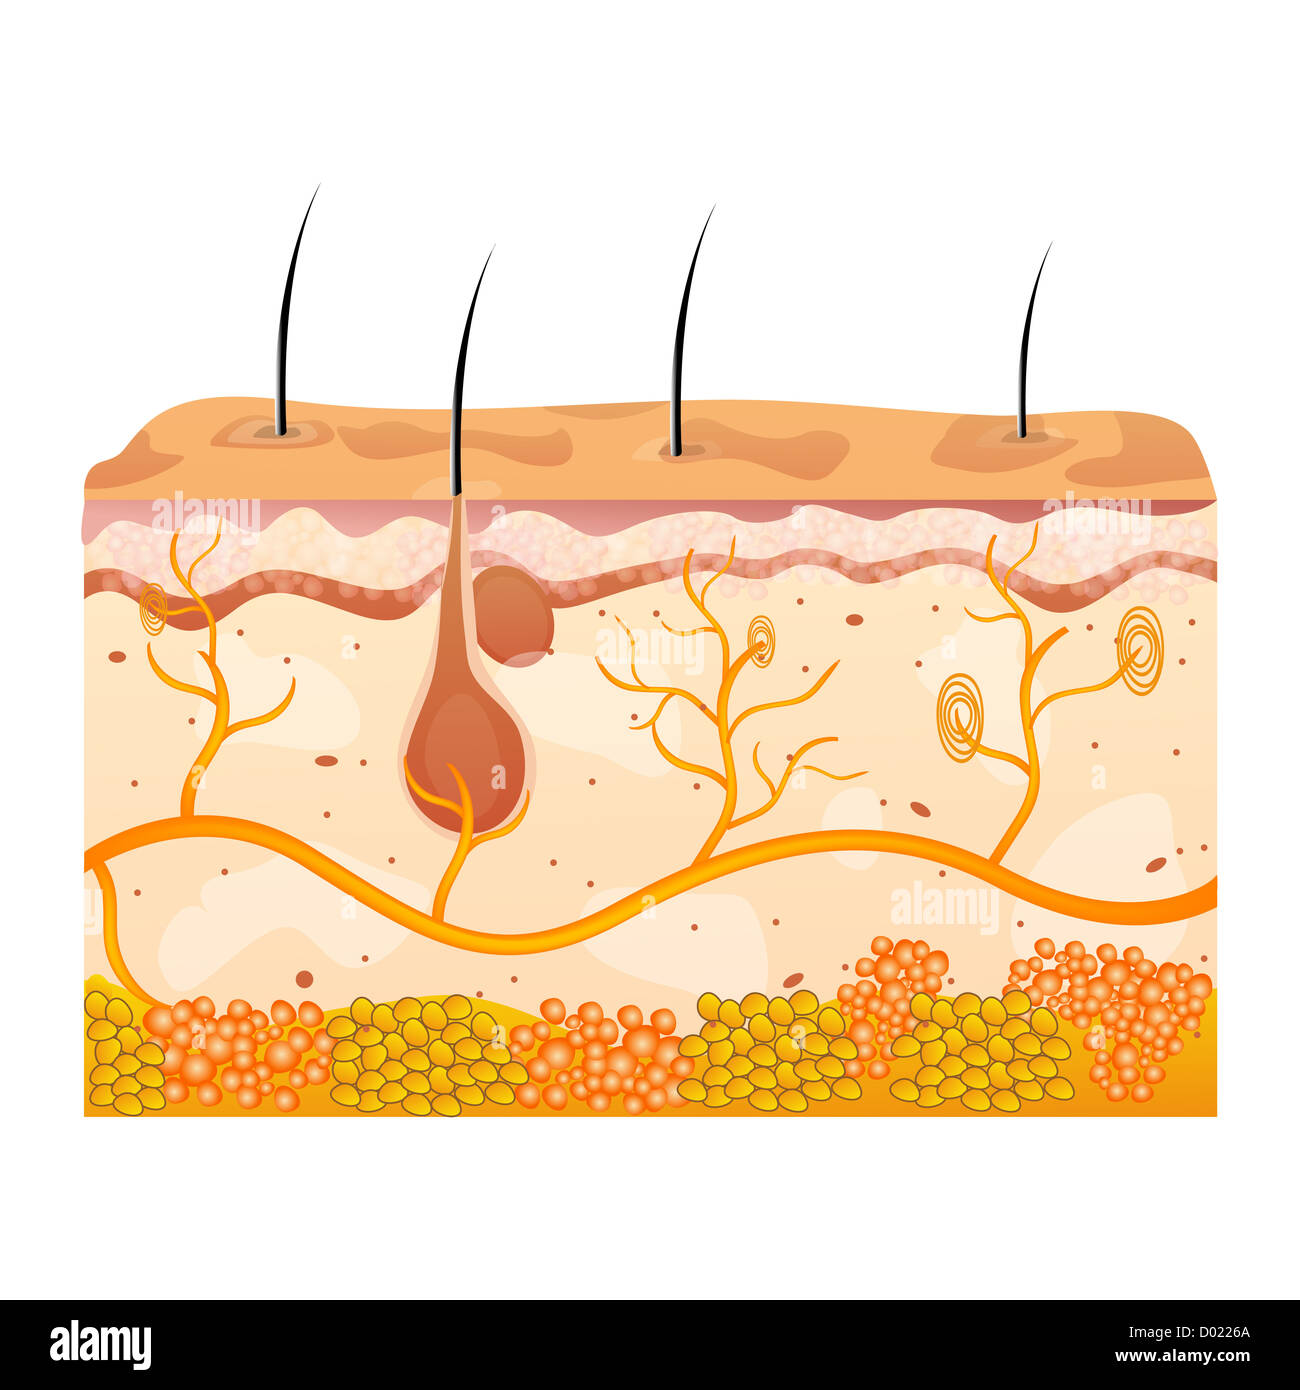 illustration of skin cells on white background Stock Photo